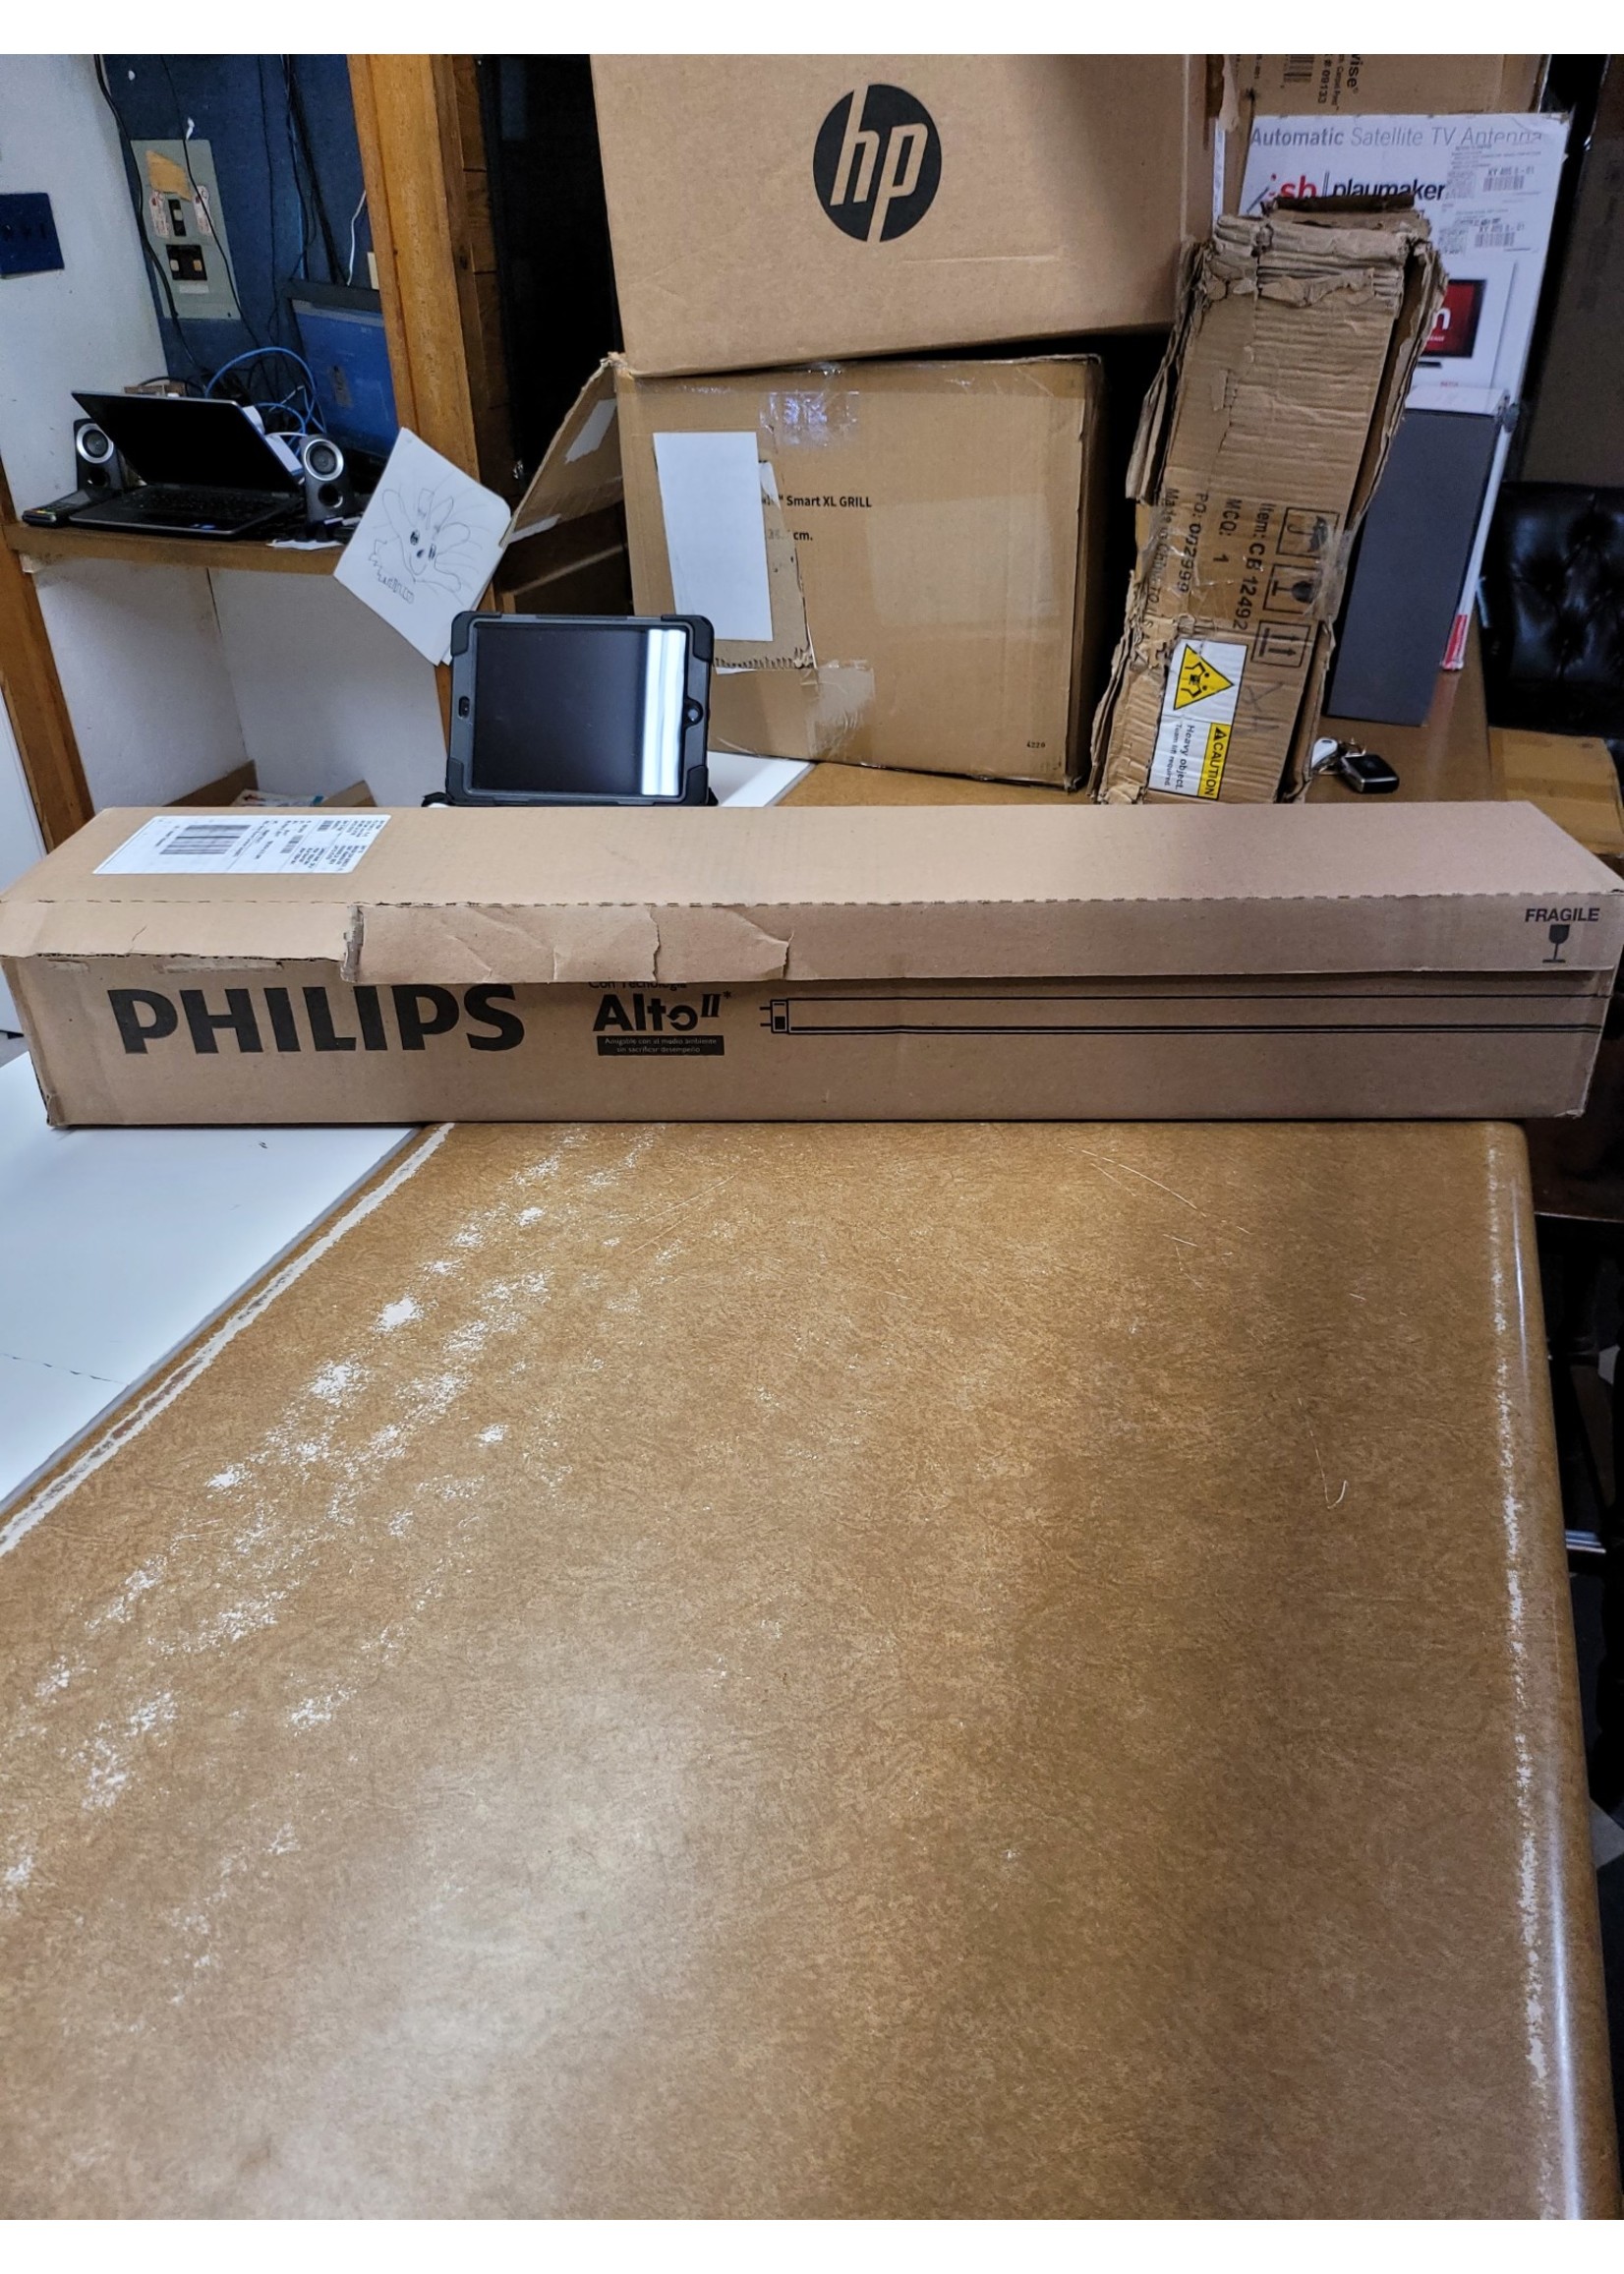 Philips 281477 F30T/CW Alto 30 watt - 36" - T8 - Medium Bi-Pin (G13) Base - 4,100K - Cool White - ALTO | Philips Fluorescent Light Bulb 30 Bulb Pack